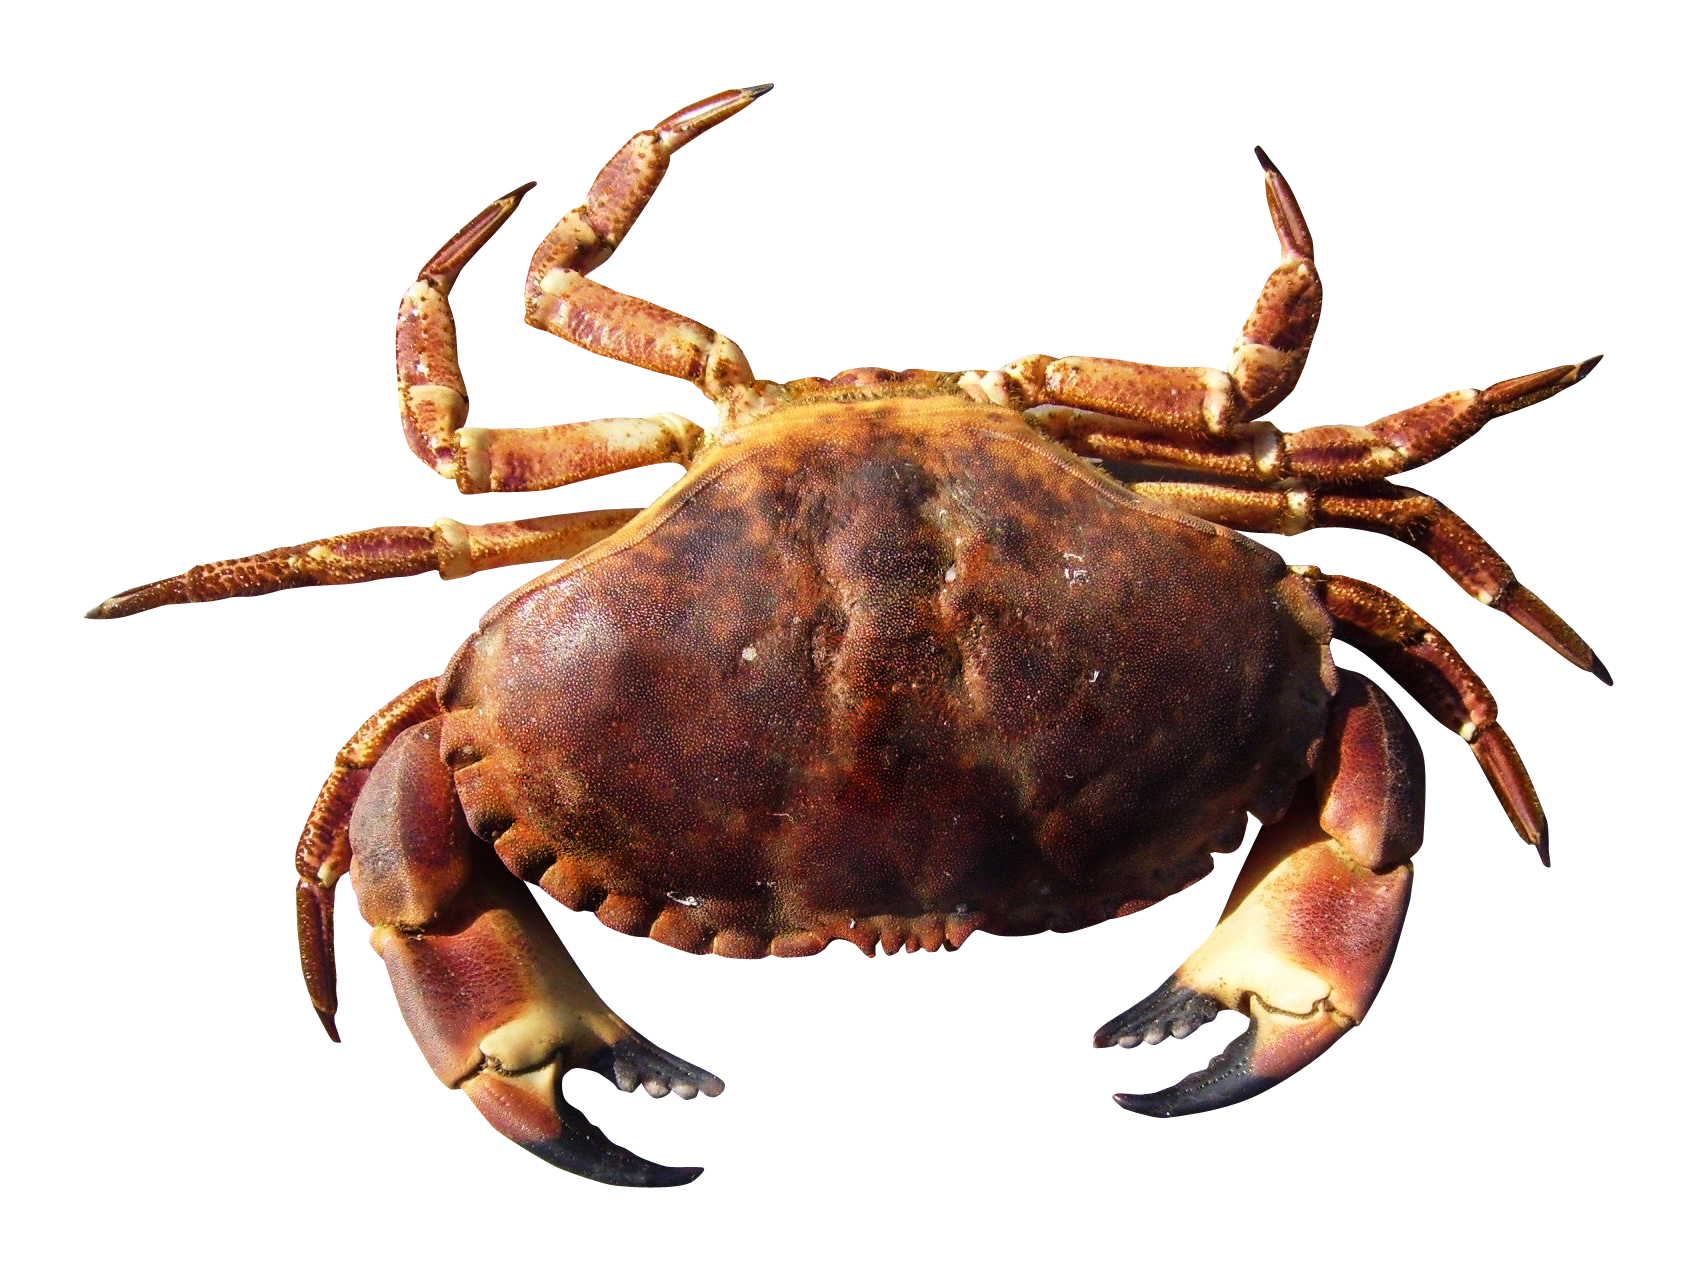 Crab Transparent PNG Image